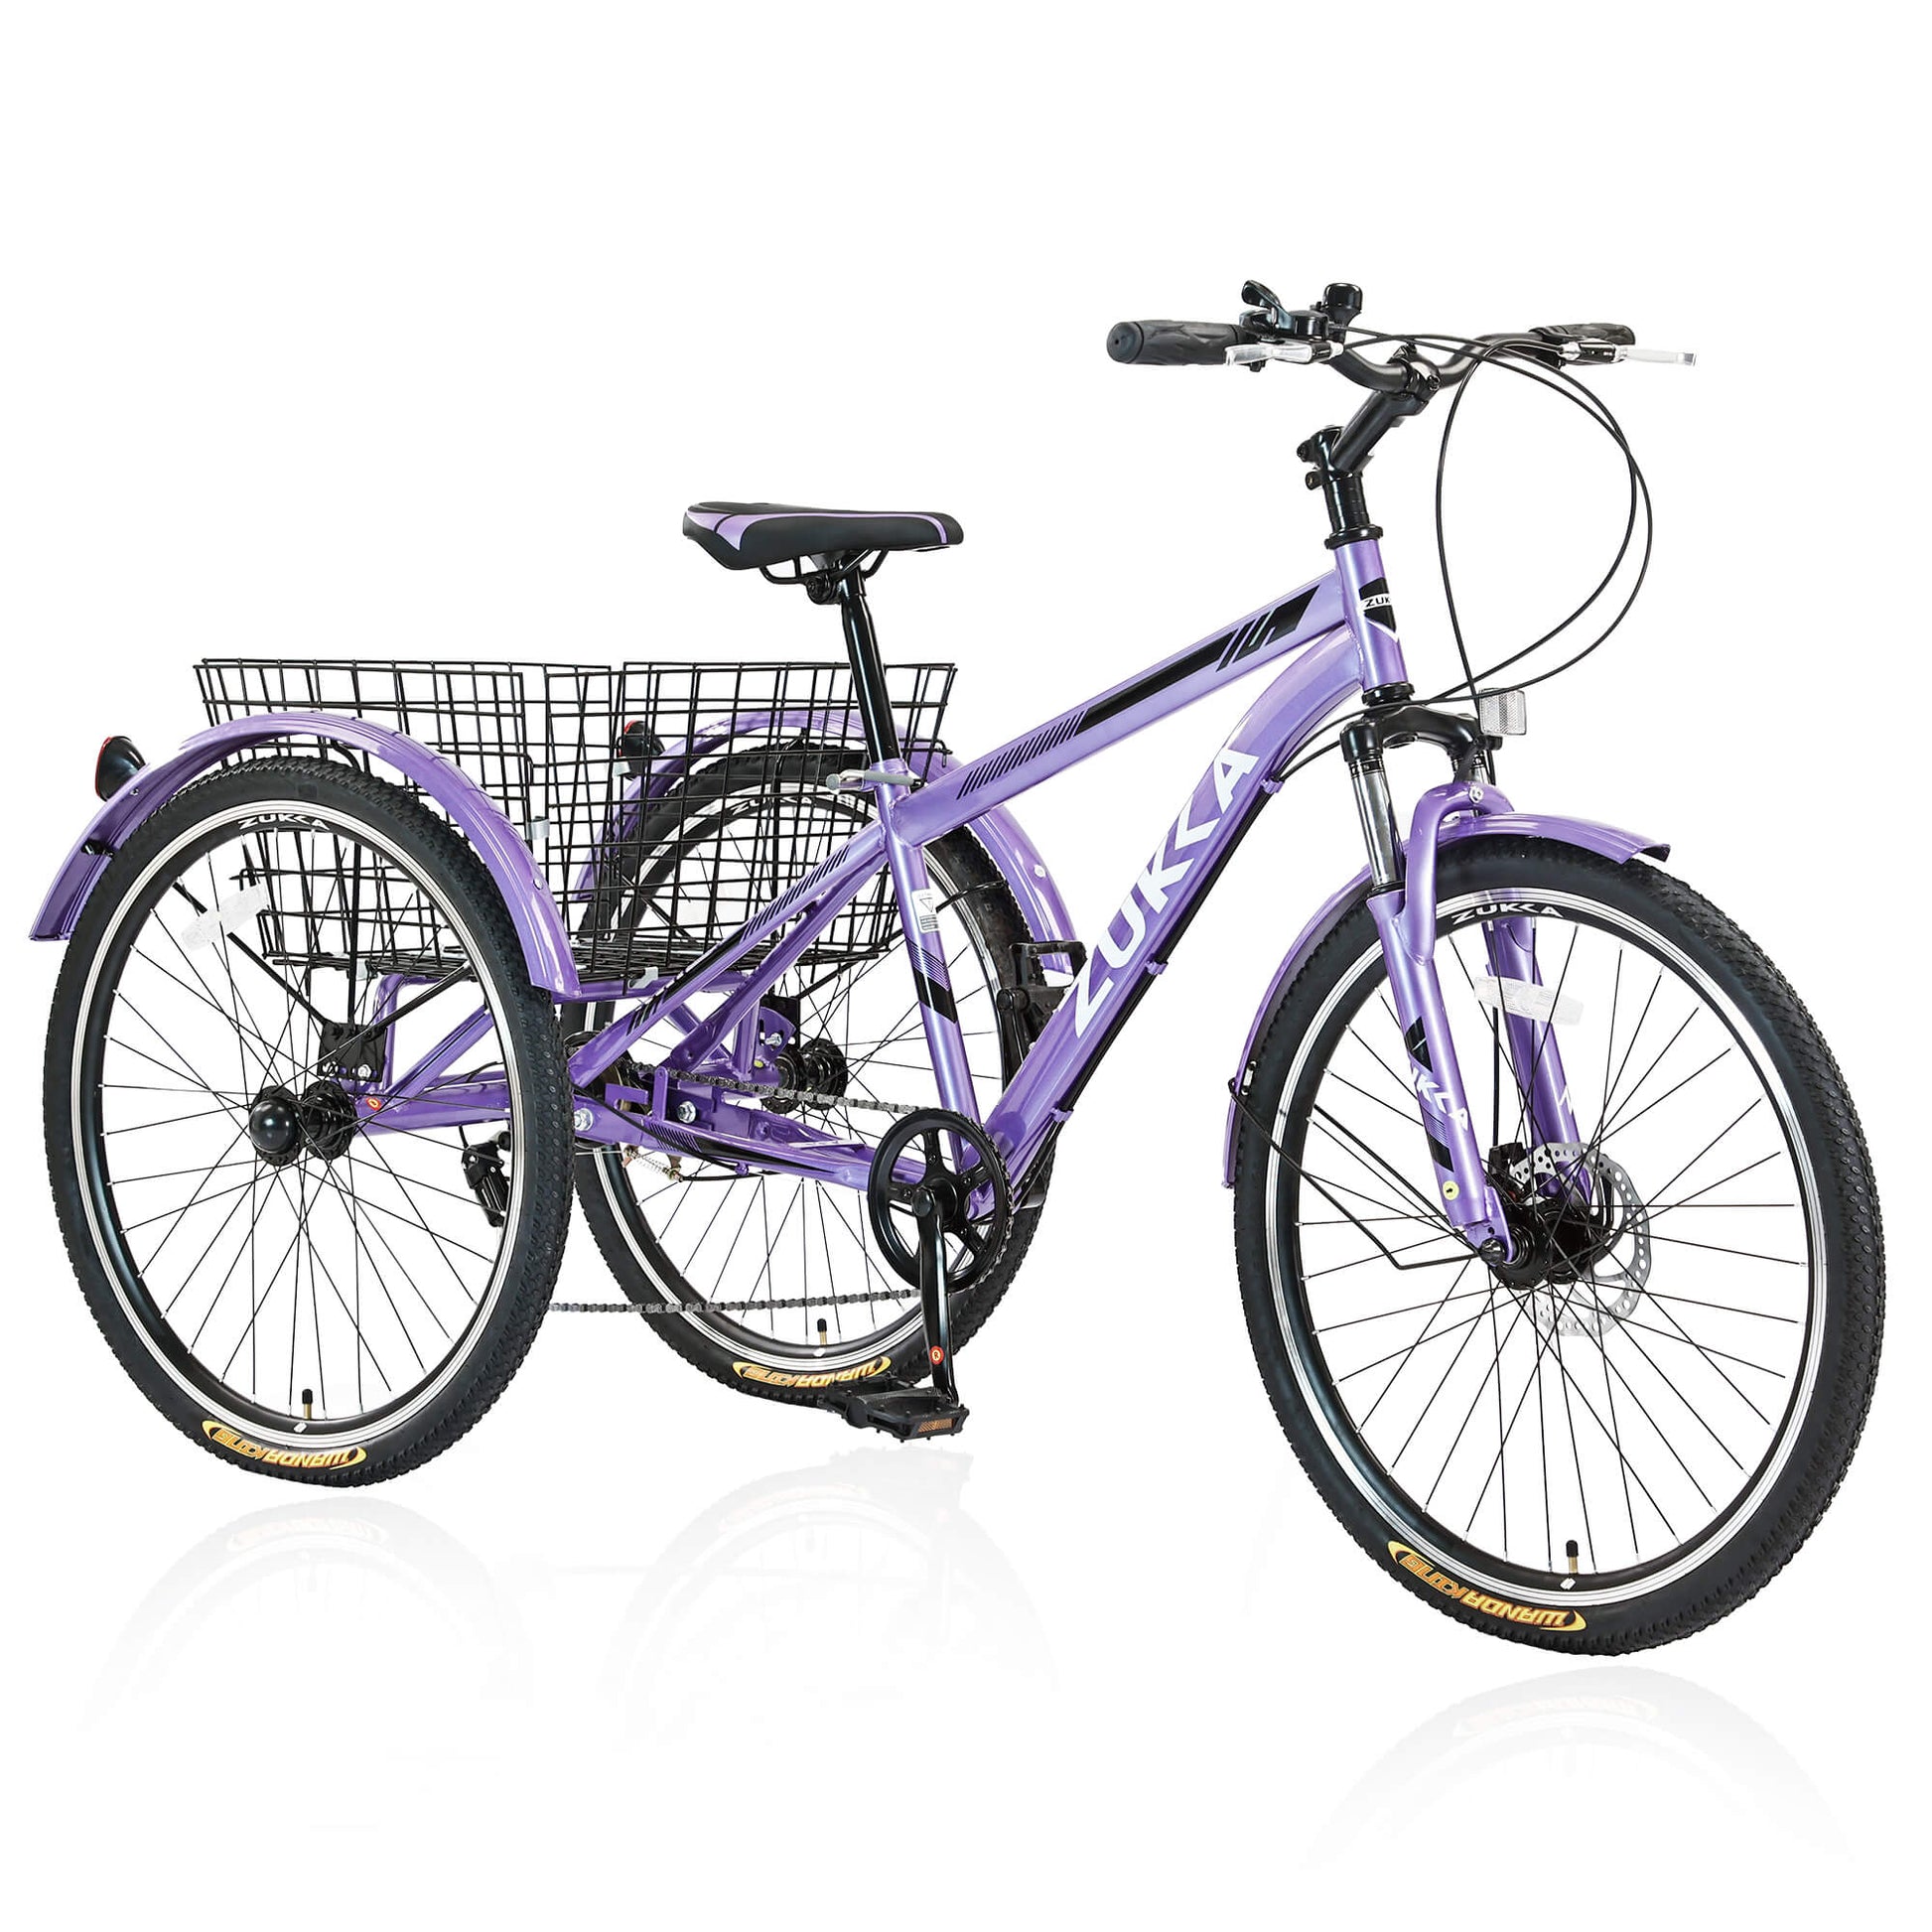 Zukka Wanda 26“ 7-Speed MTB Adult Tricycle - Hycline Purple